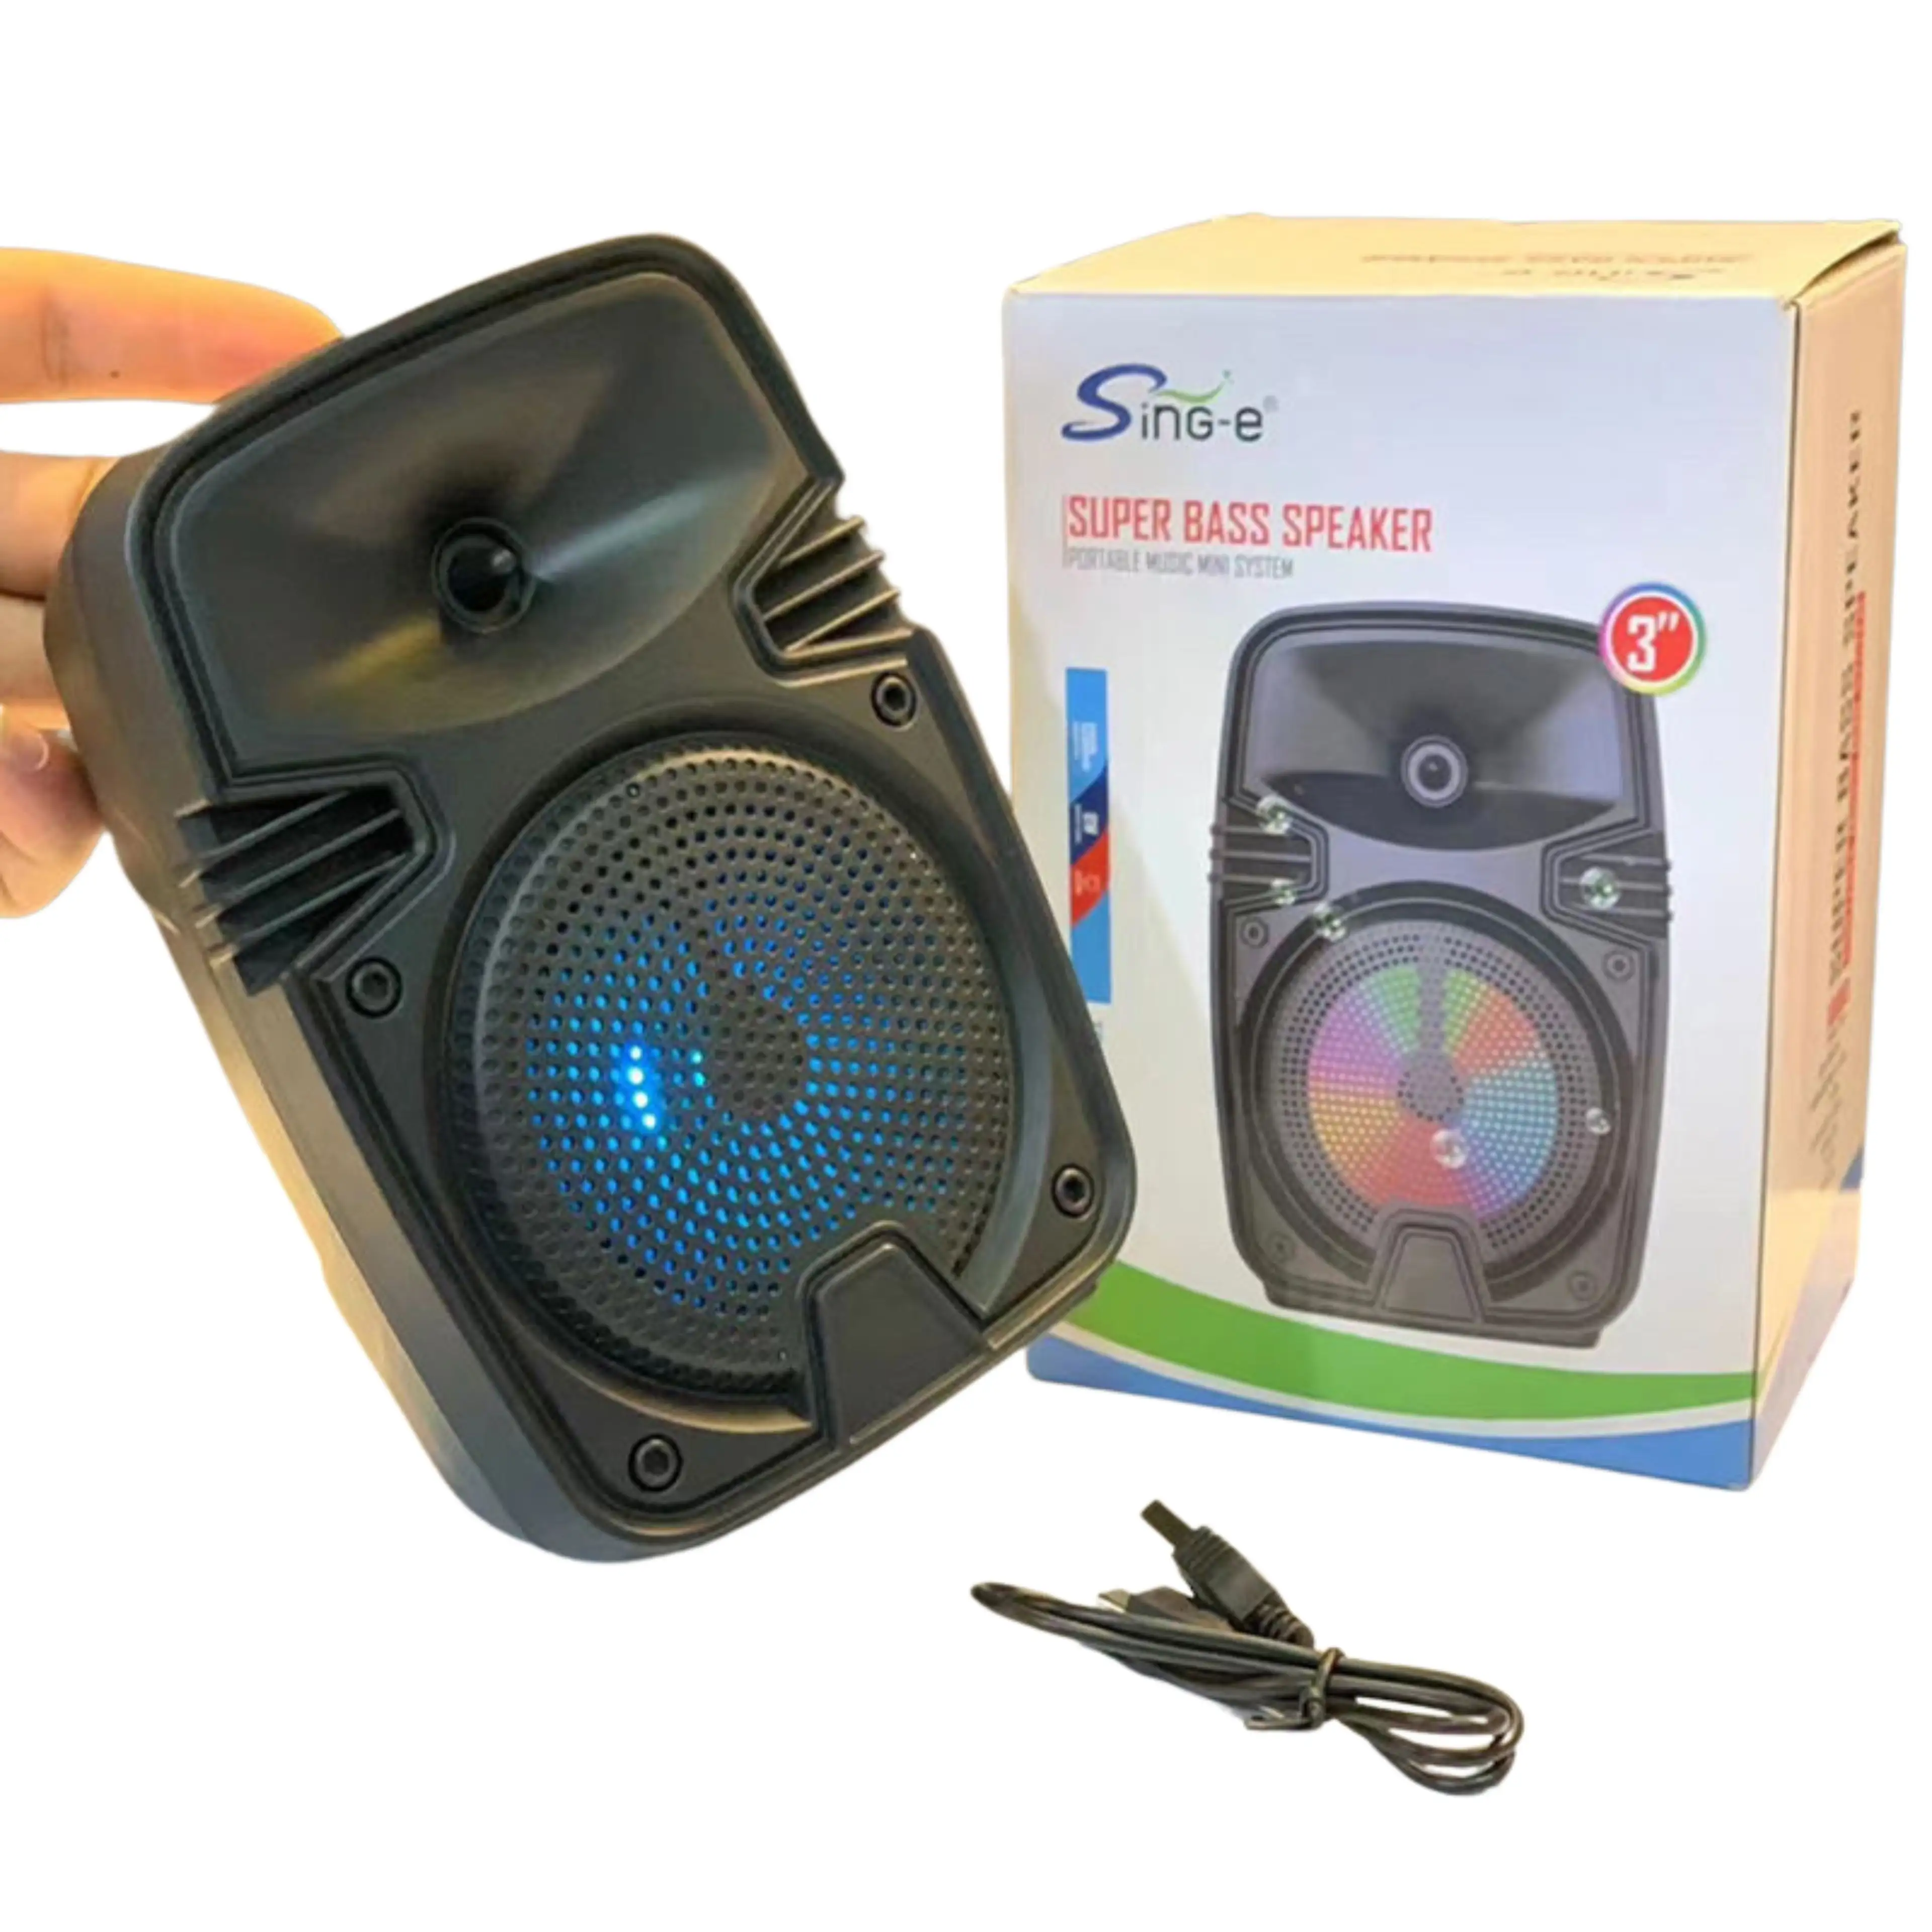 ZQS1328 speaker Mini portabel Bass Super, sistem musik BT nirkabel Potable menggunakan USB kartu TF speaker Mini PA FM Radio